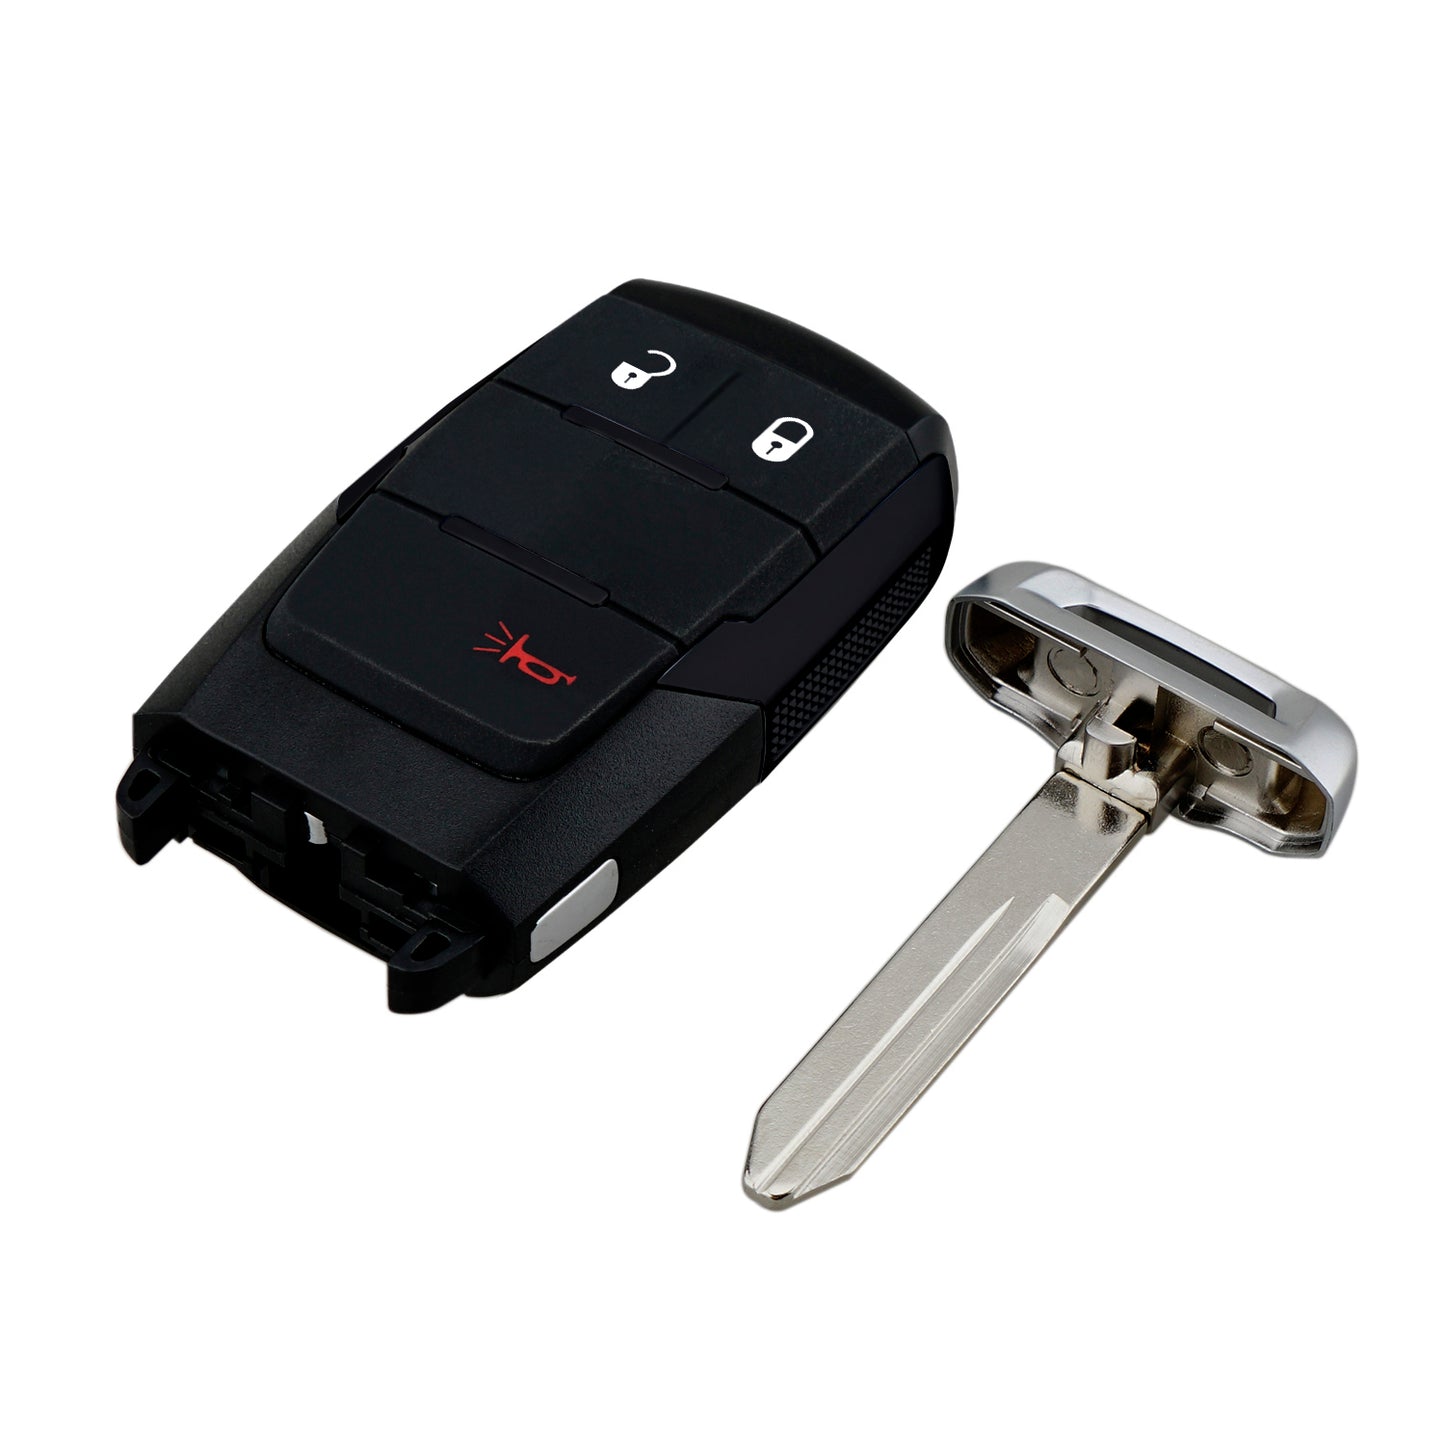 3 Buttons 433MHz Keyless Entry Fob Remote Car Key For 2019-2022 Dodge Ram Pickup HD 2500 3500 4500 5500 Models FCCID: GQ4-76T SKU: J691